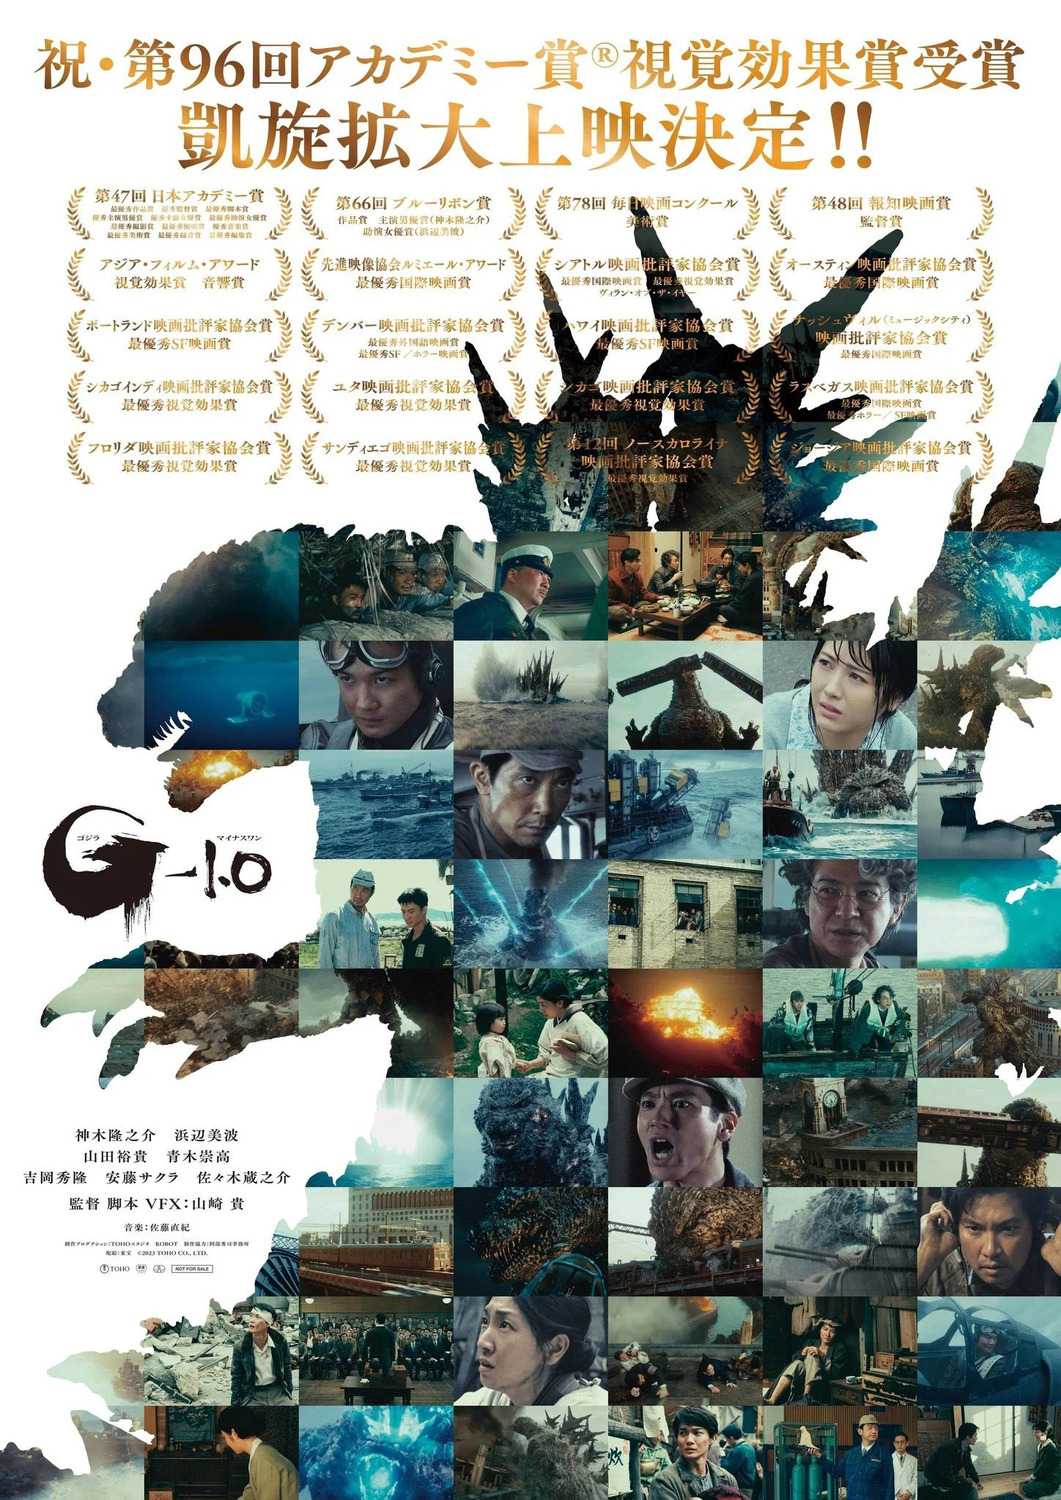 Extra Large Movie Poster Image for Godzilla: Minus One (#11 of 11)